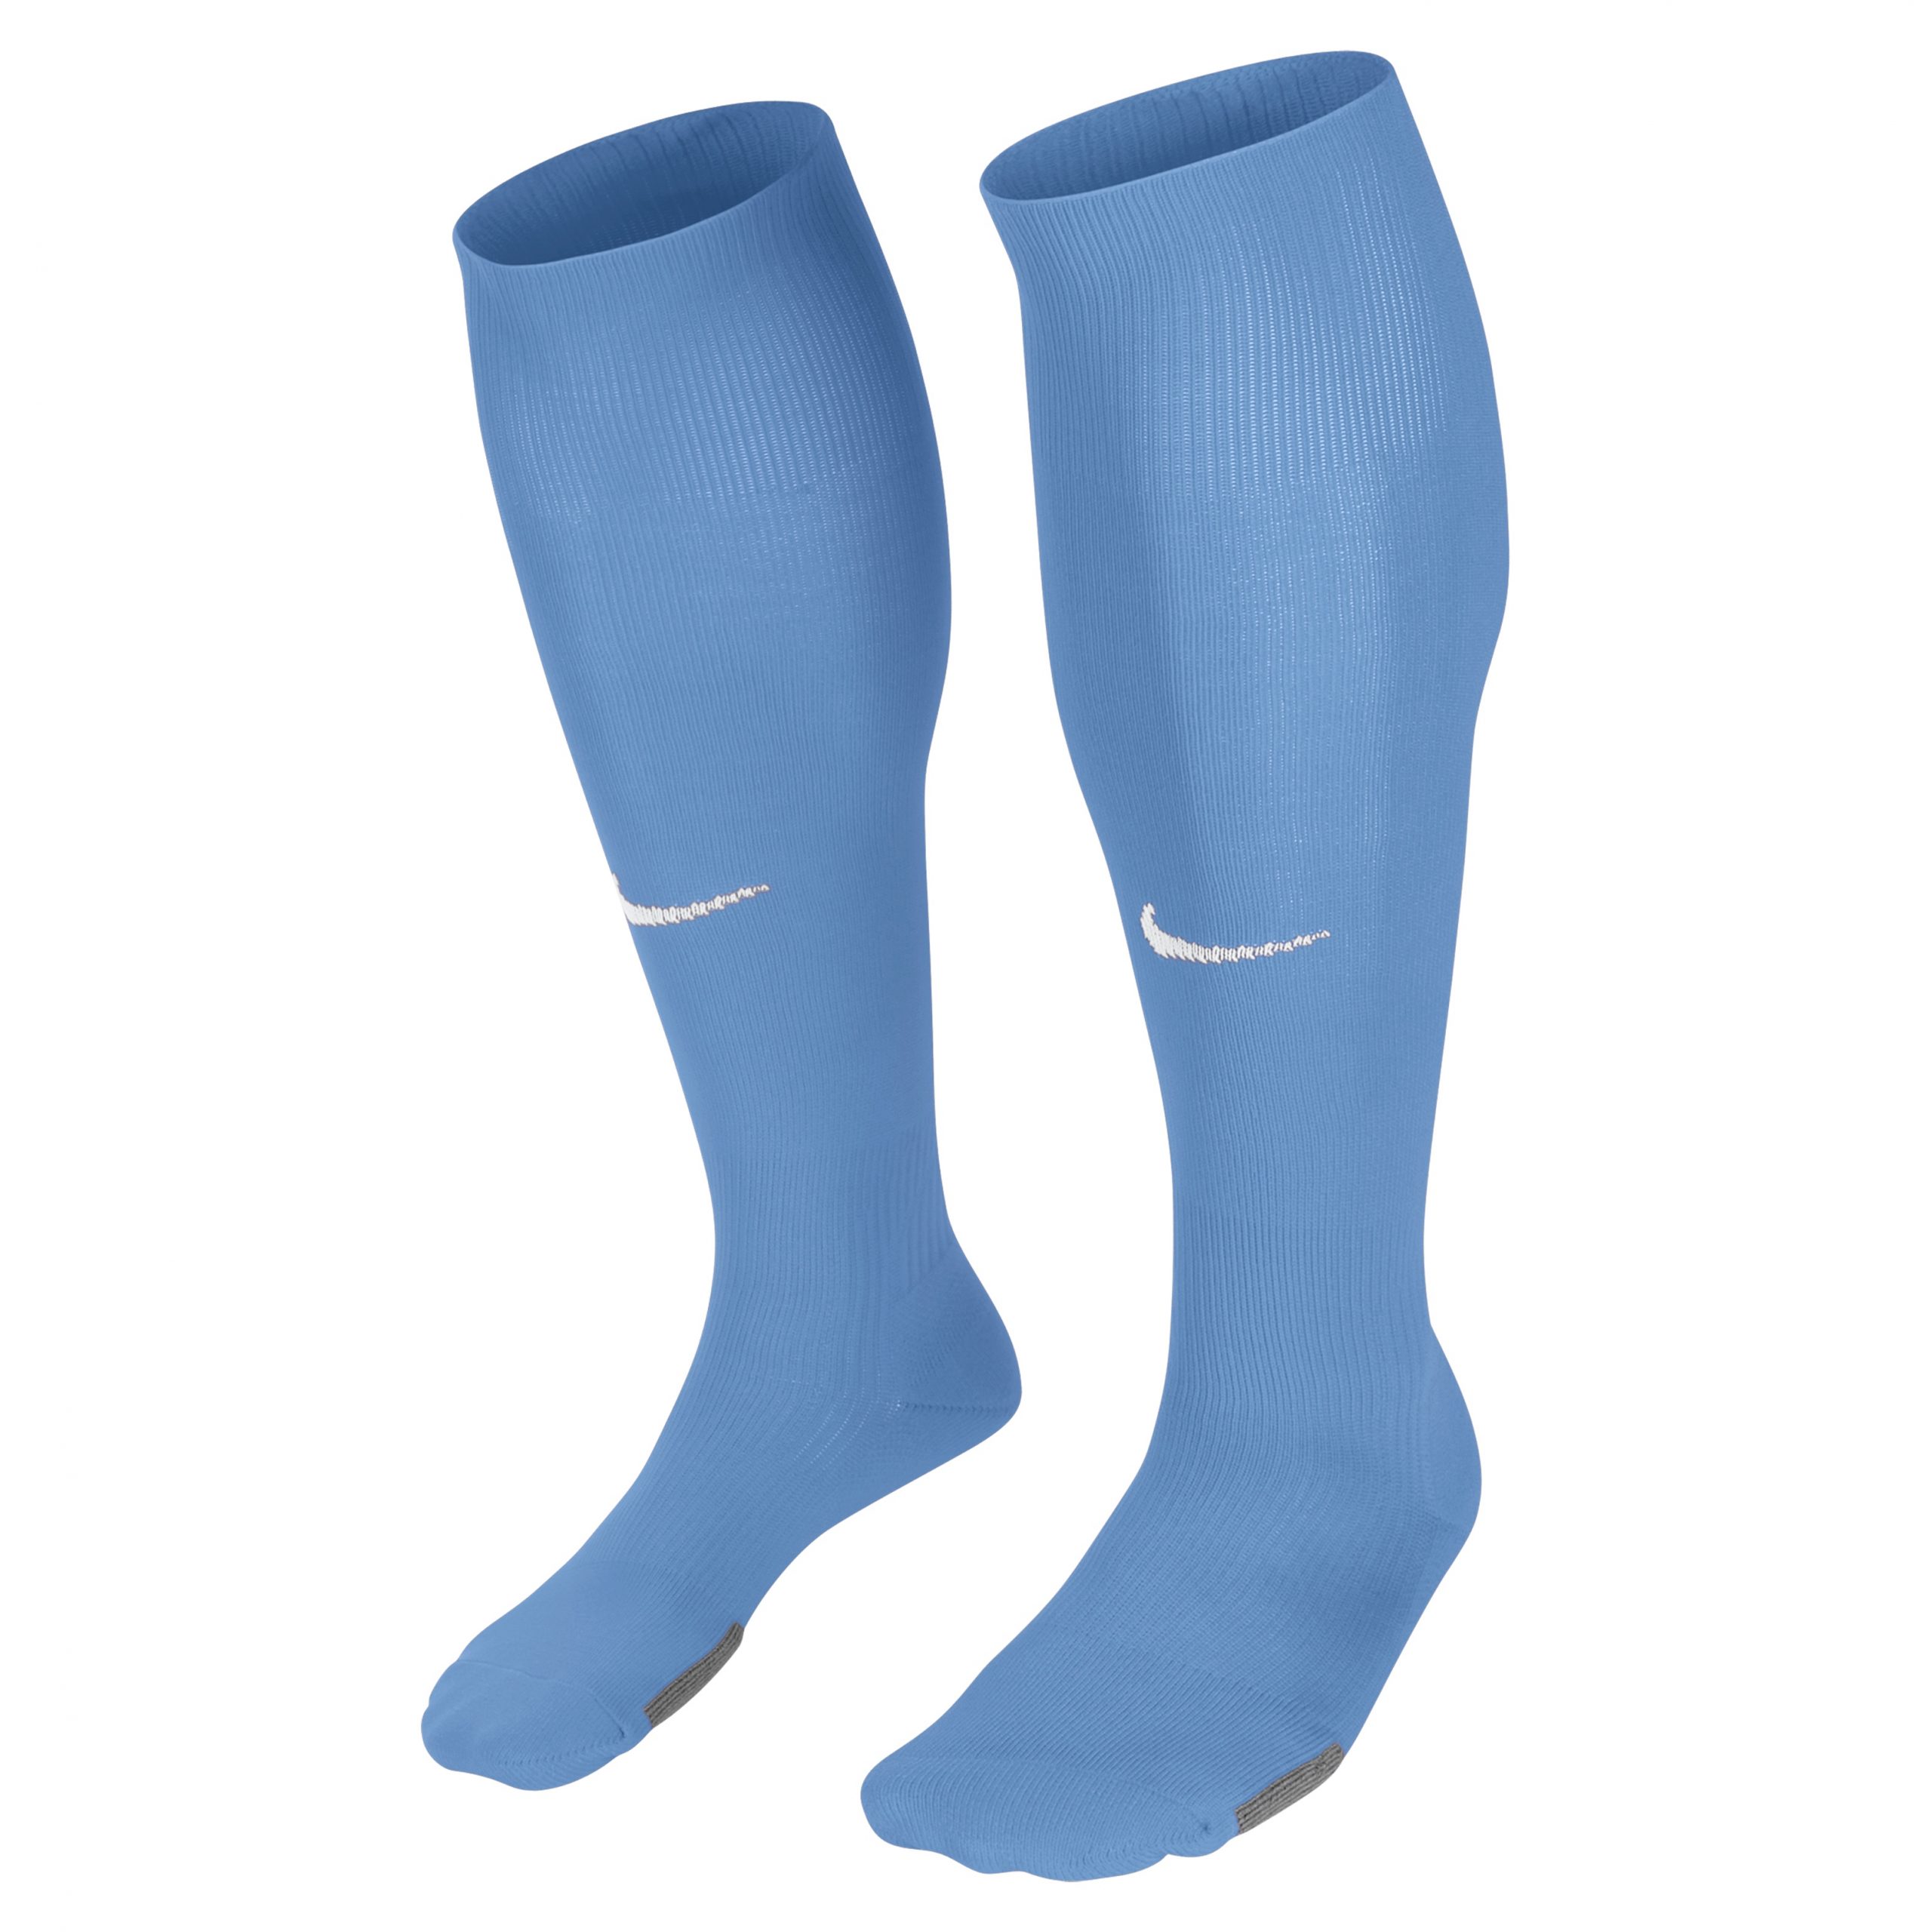 Nike Dri-Fit Socks (Light Blue) - The 